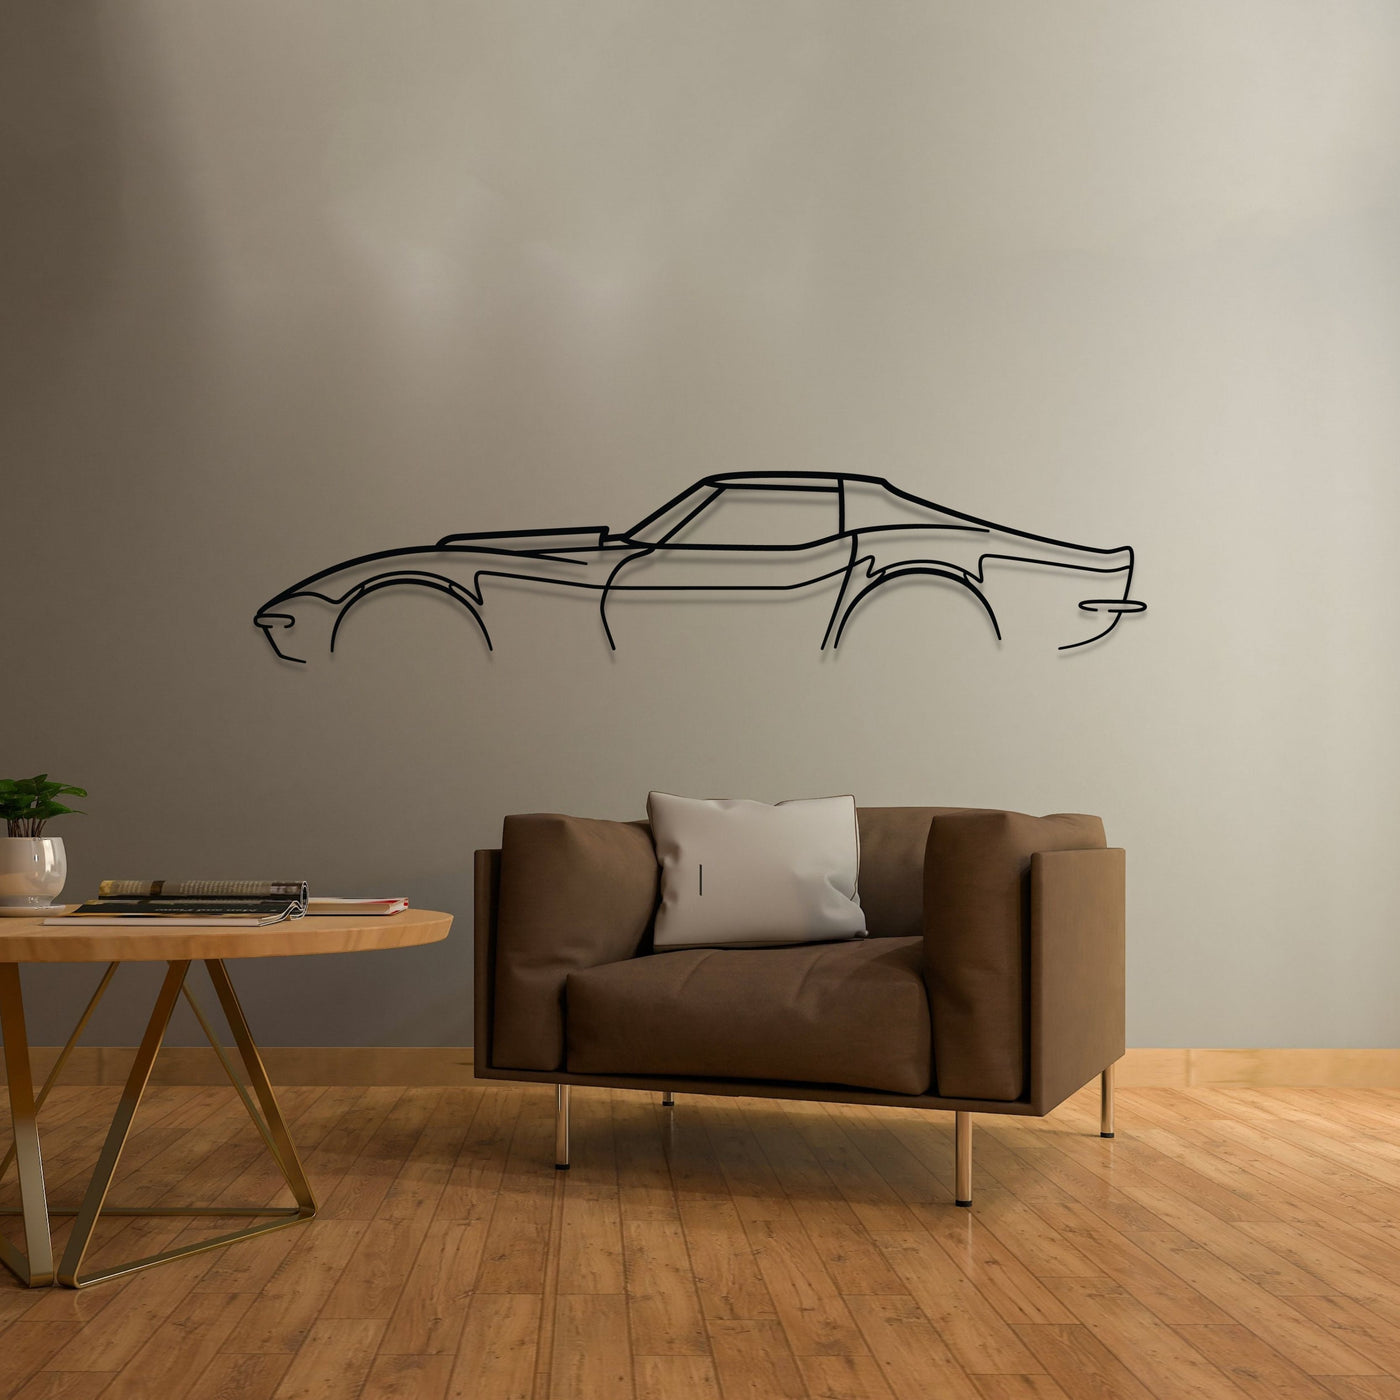 Corvette c3 L88 Classic Silhouette Metal Wall Art